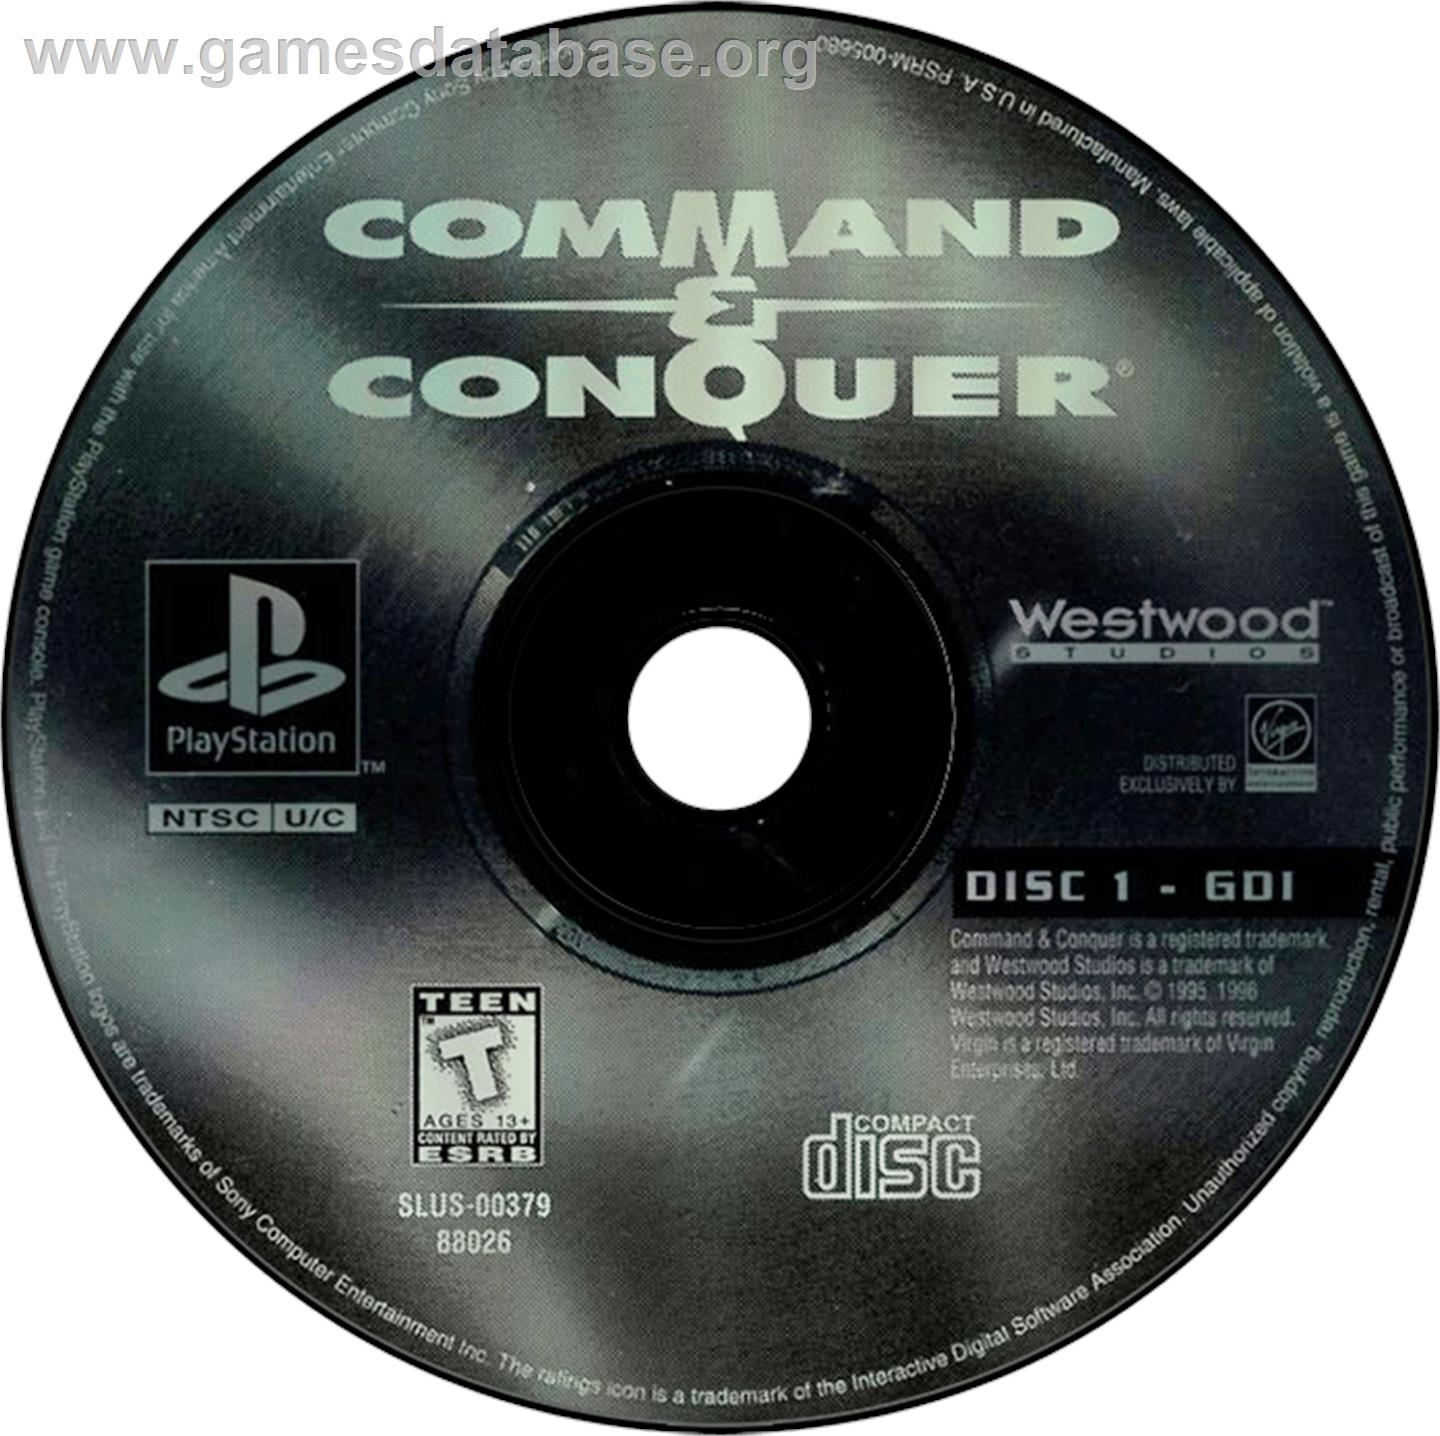 Command & Conquer: Red Alert - Retaliation - Sony Playstation - Artwork - Disc